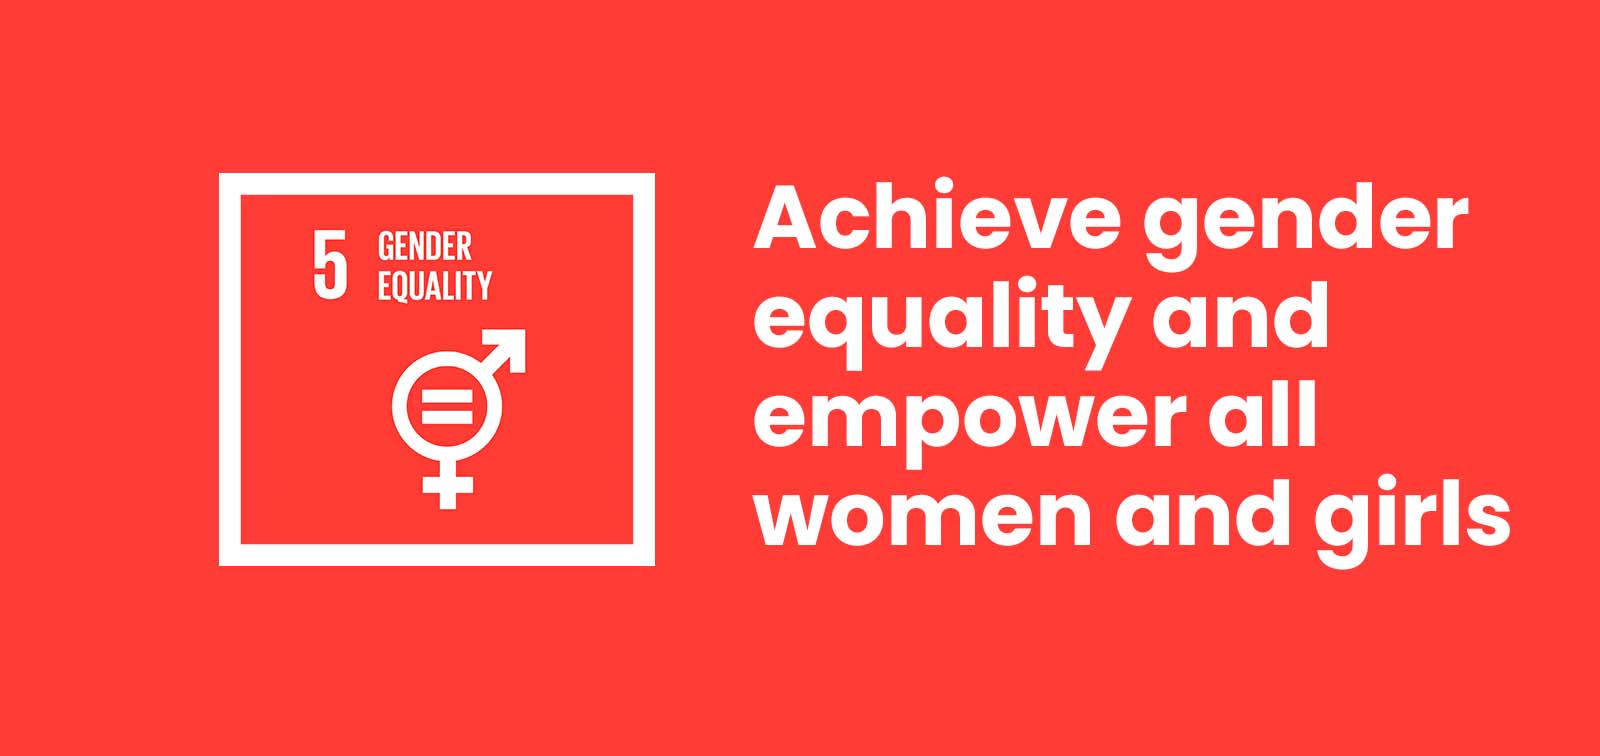 Gender equality - Water Organization | Access, sanitation, hygiene - Lazos de Agua Program